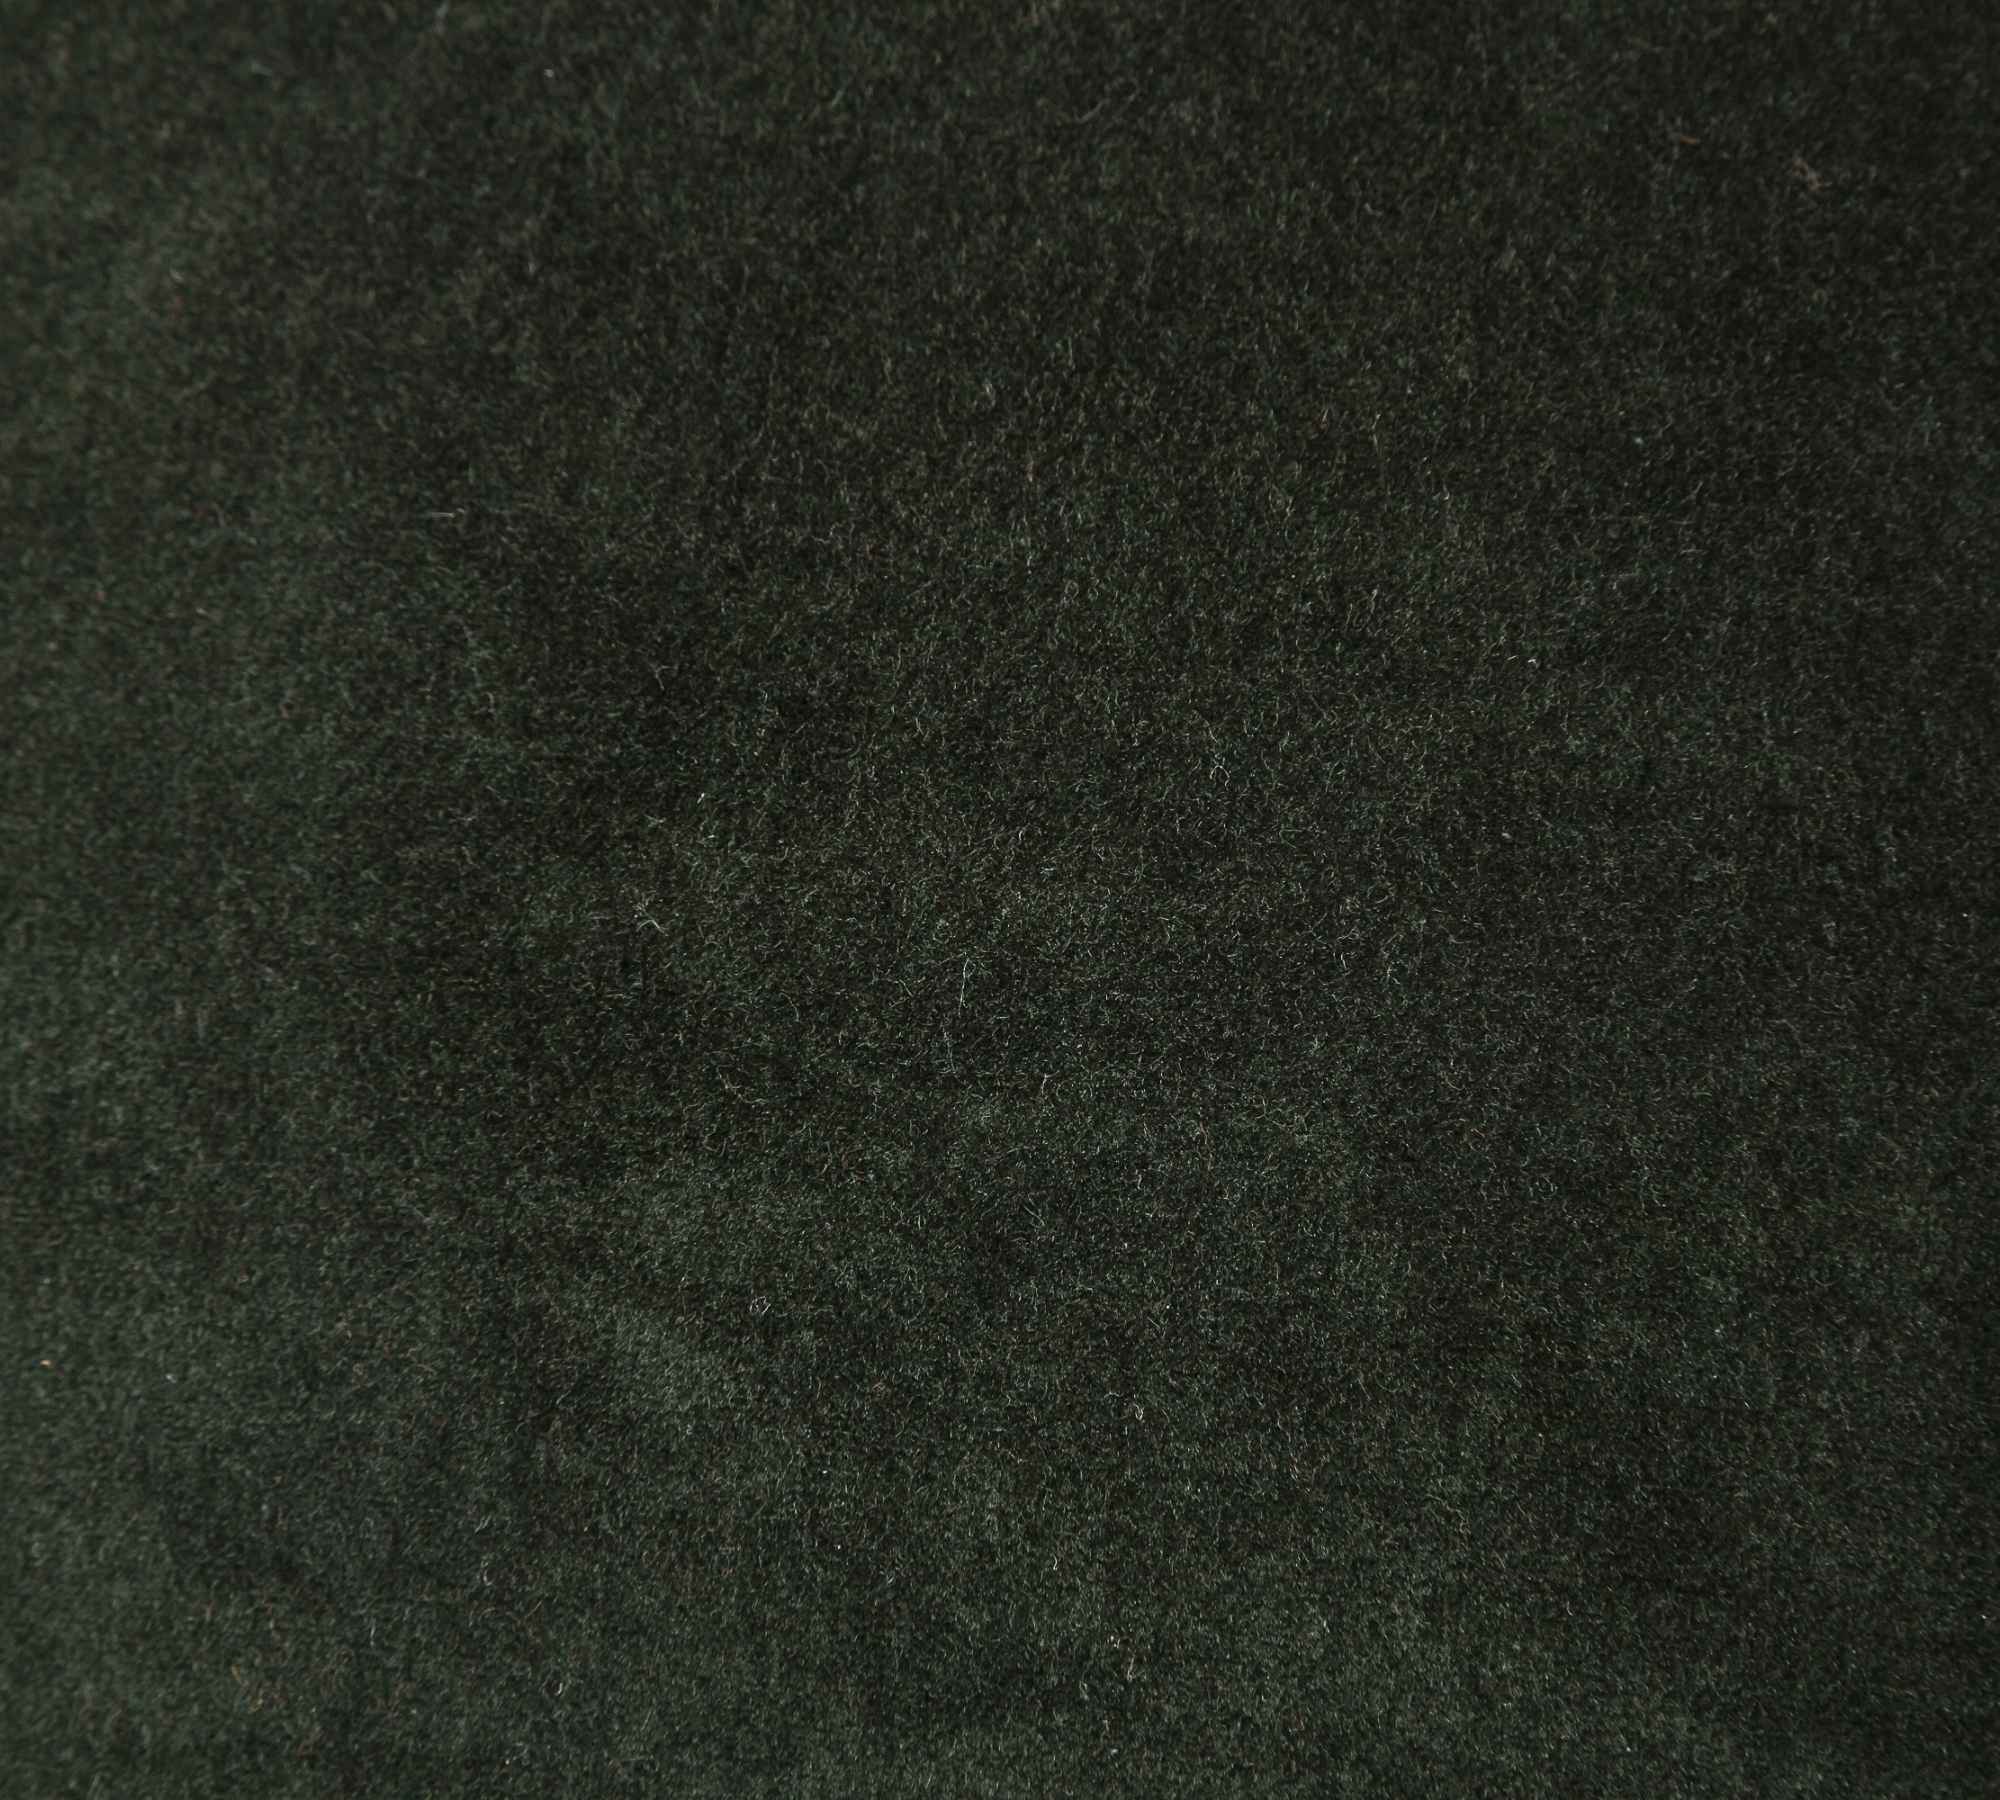 Kissenhülle Baumwolle Dunkelgrün 60 x 60cm 1